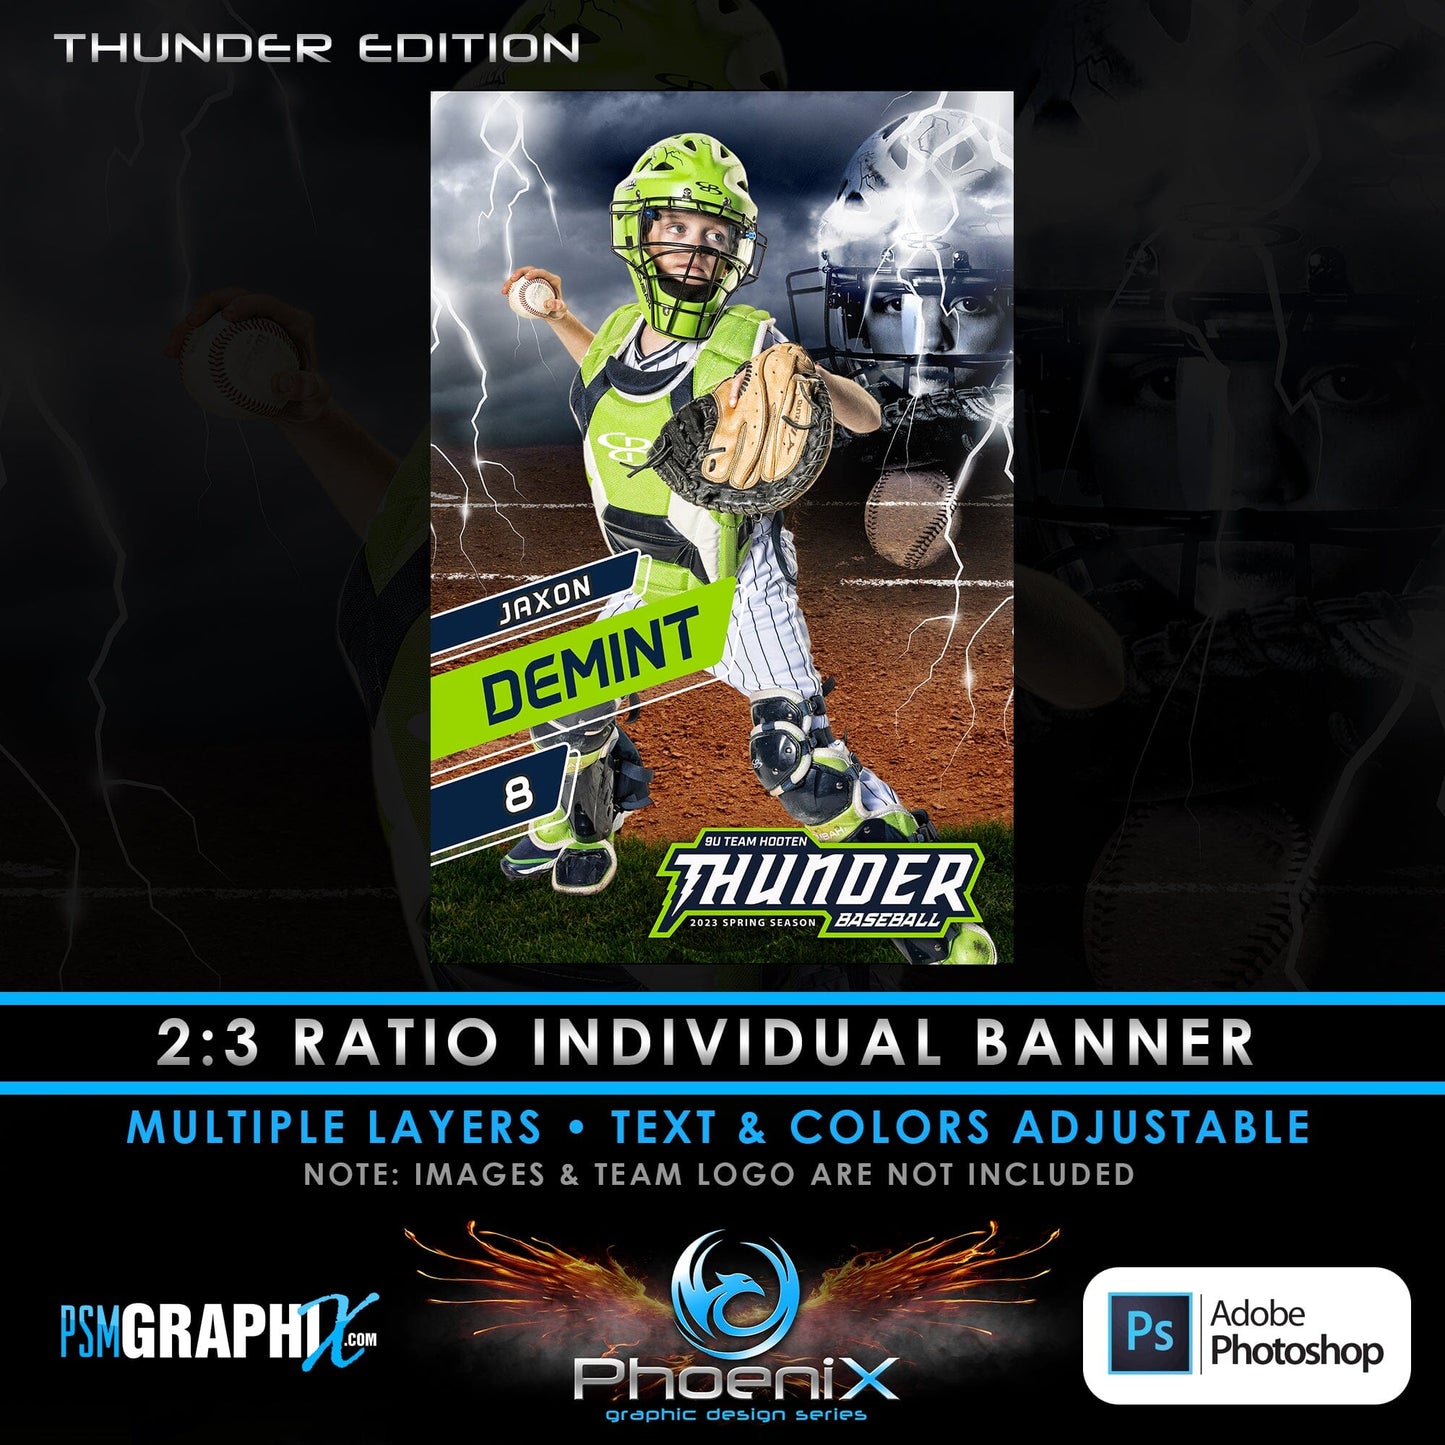 Thunder - Phoenix Series - Full Collection Bundle-Photoshop Template - PSMGraphix